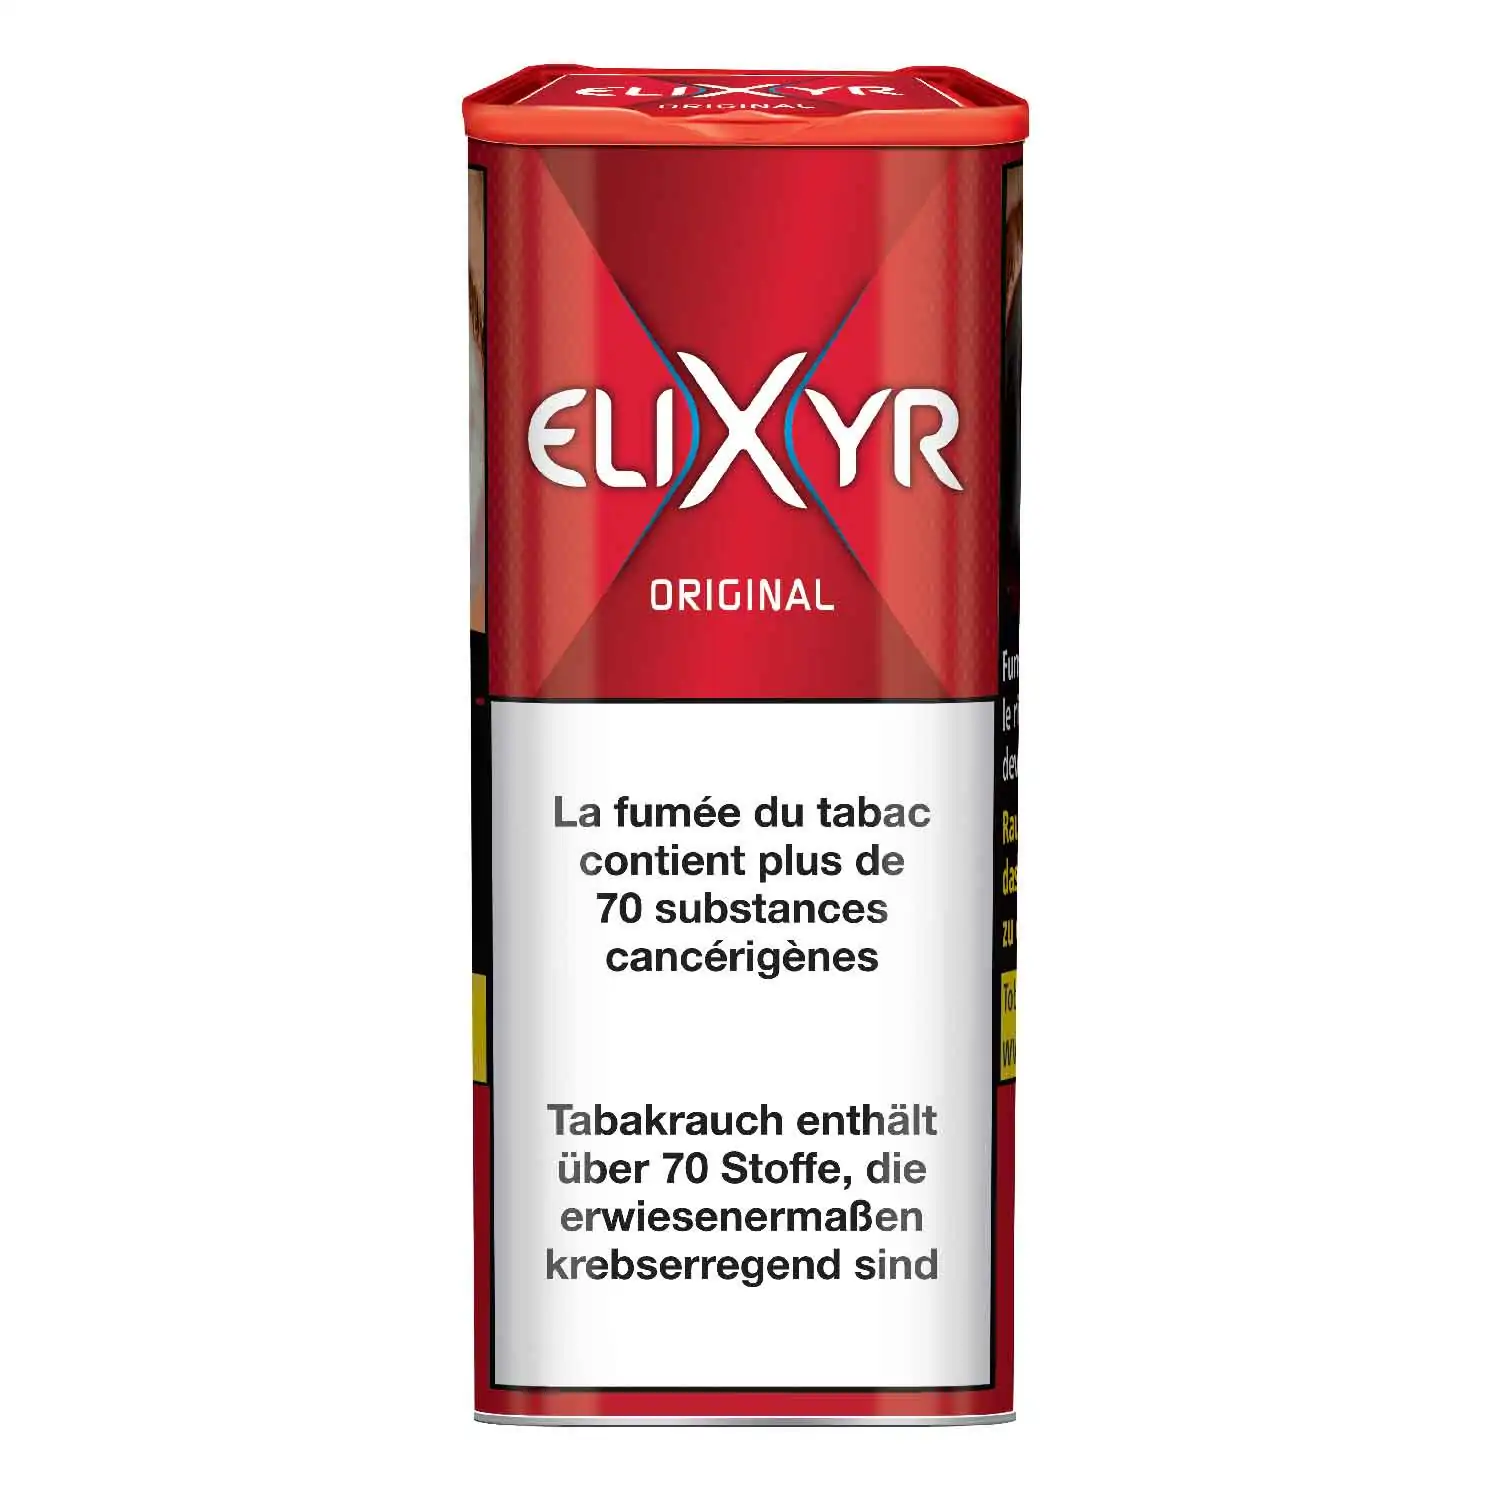 Elixyr original rouge 300g - Buy at Real Tobacco